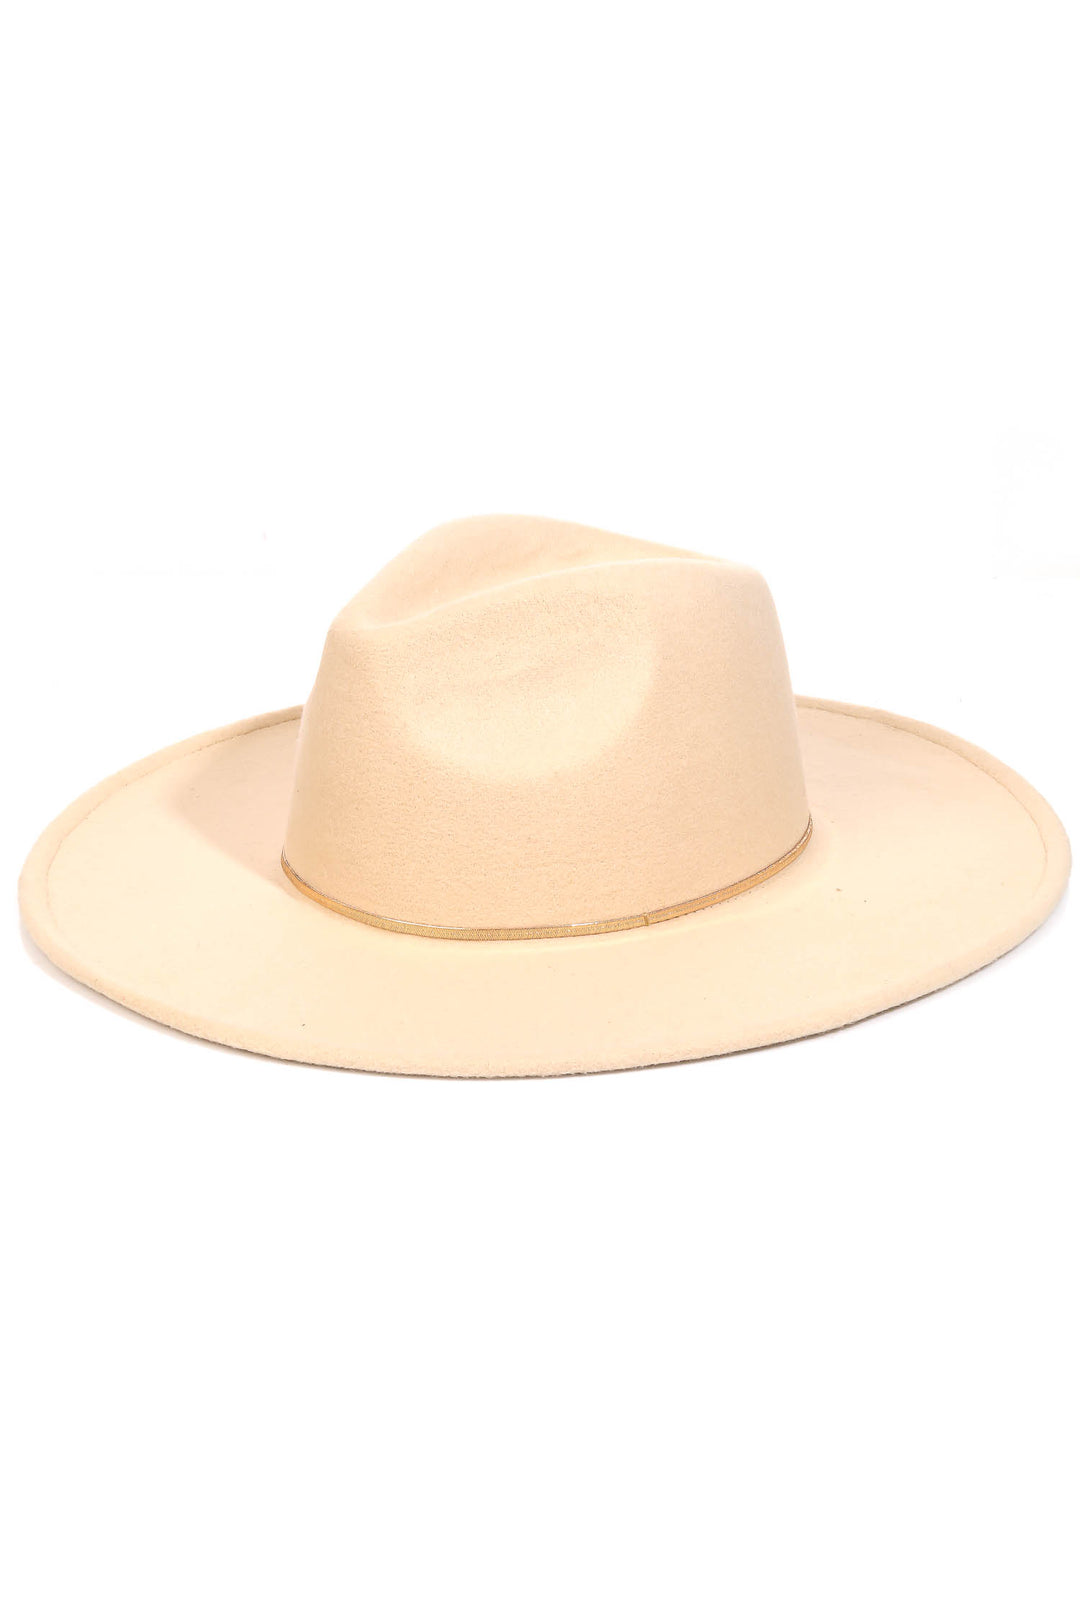 Flat Brim Herringbone Chain Hat | Ivory - Main Image Number 1 of 1